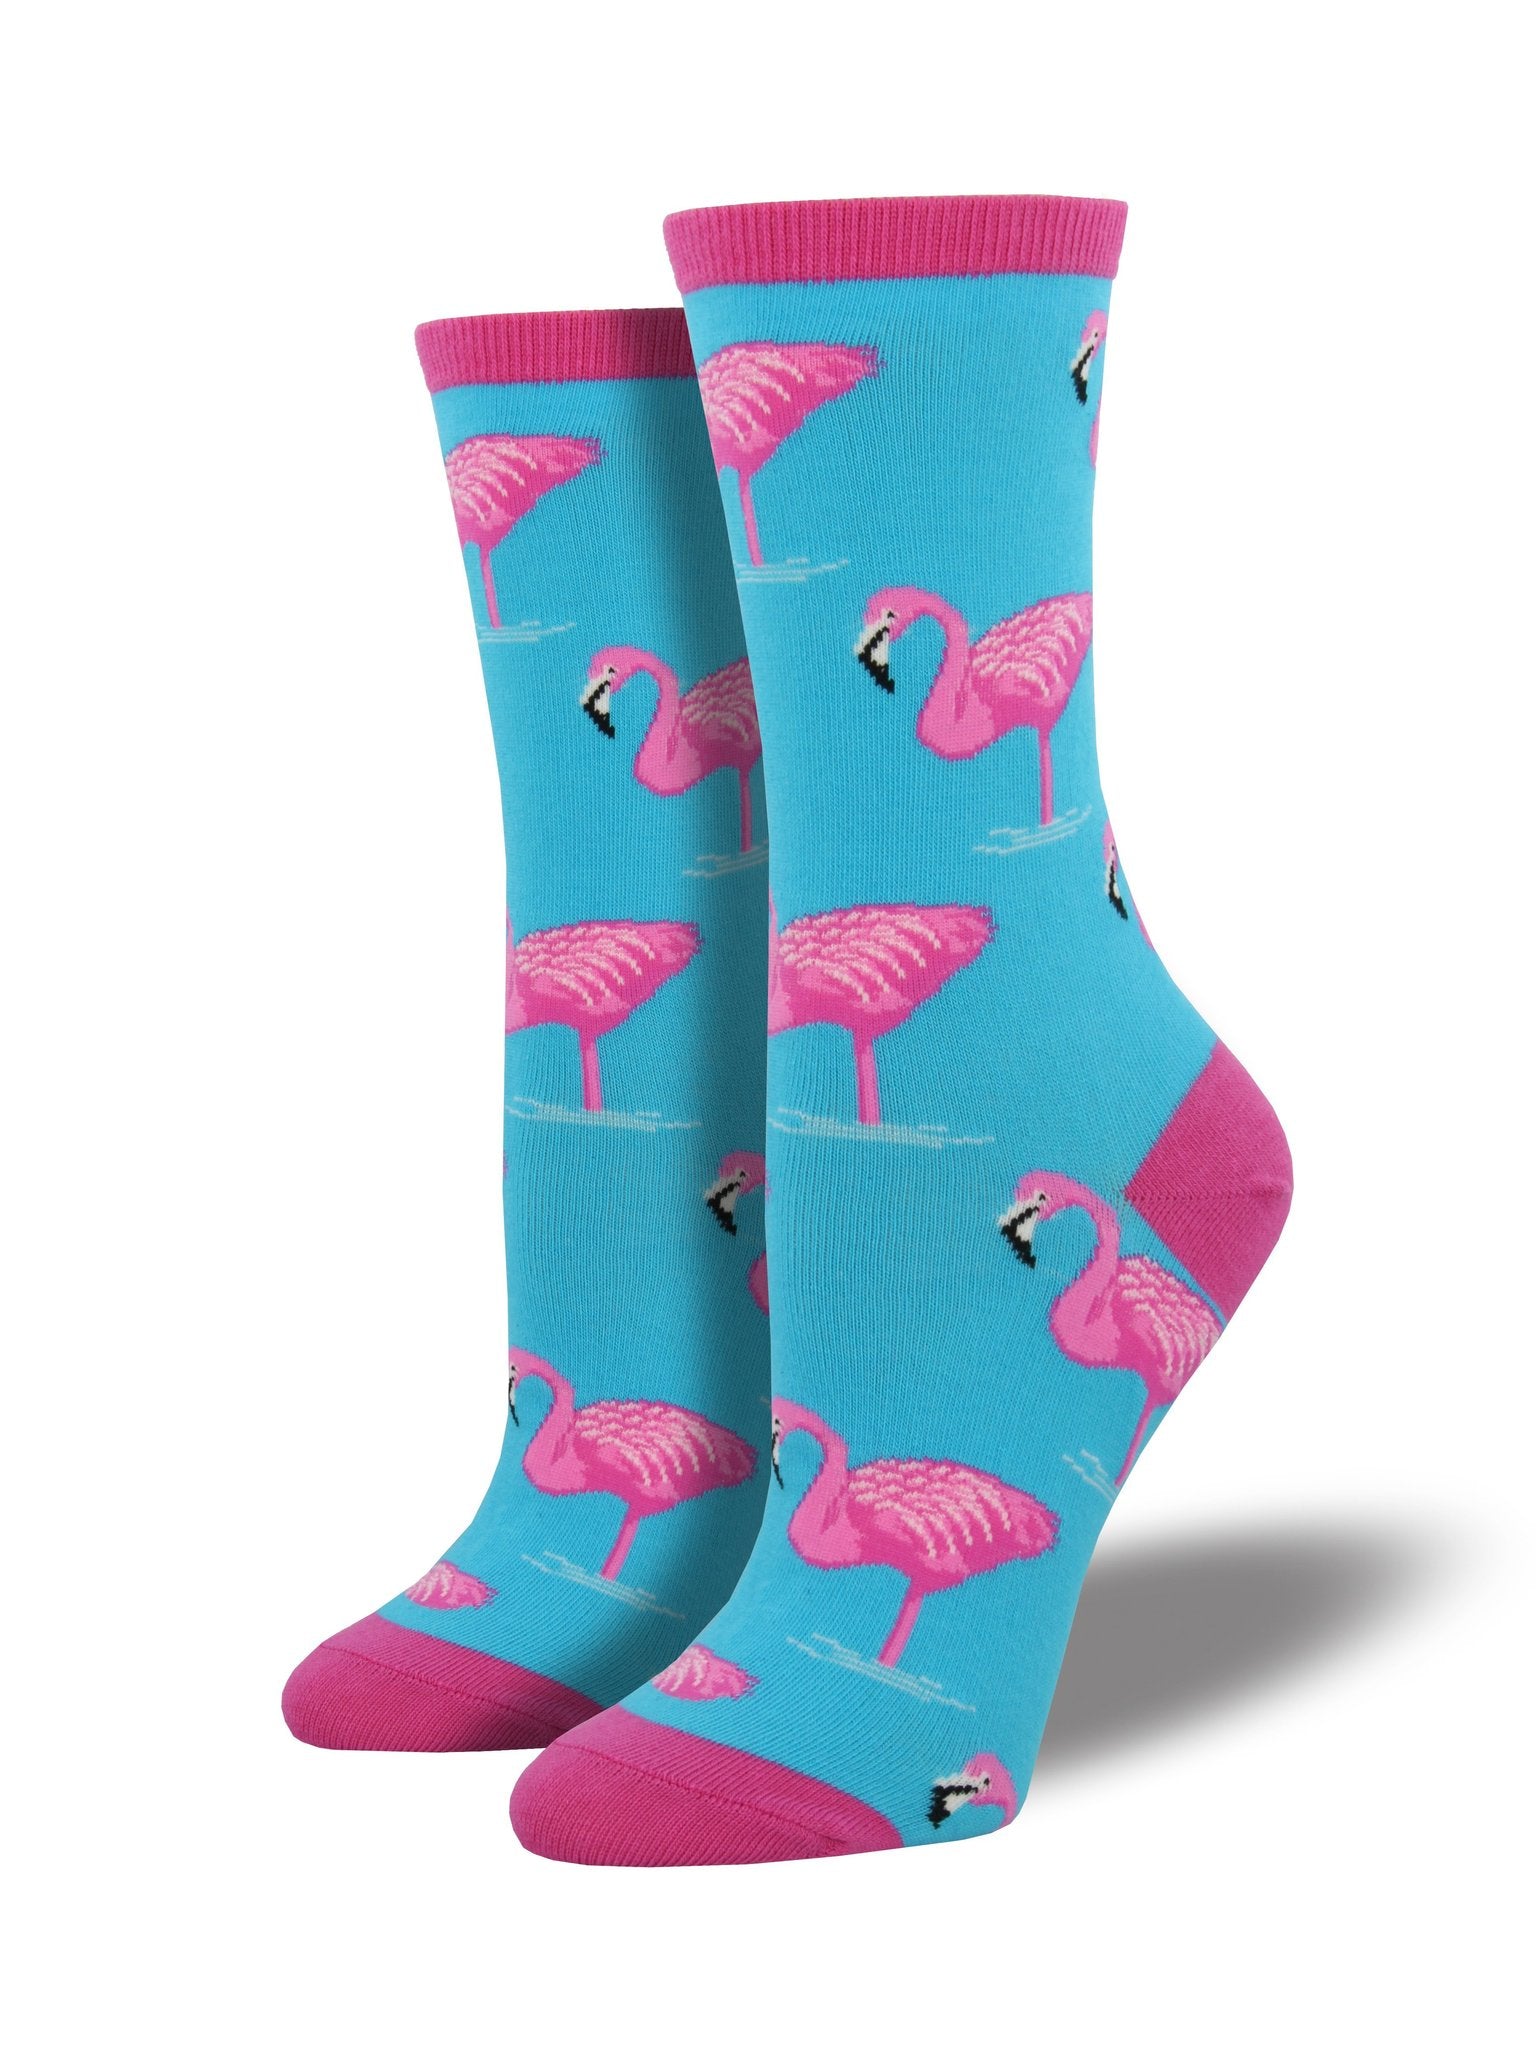 Socksmith Women's "Flamingo" Crew Socks